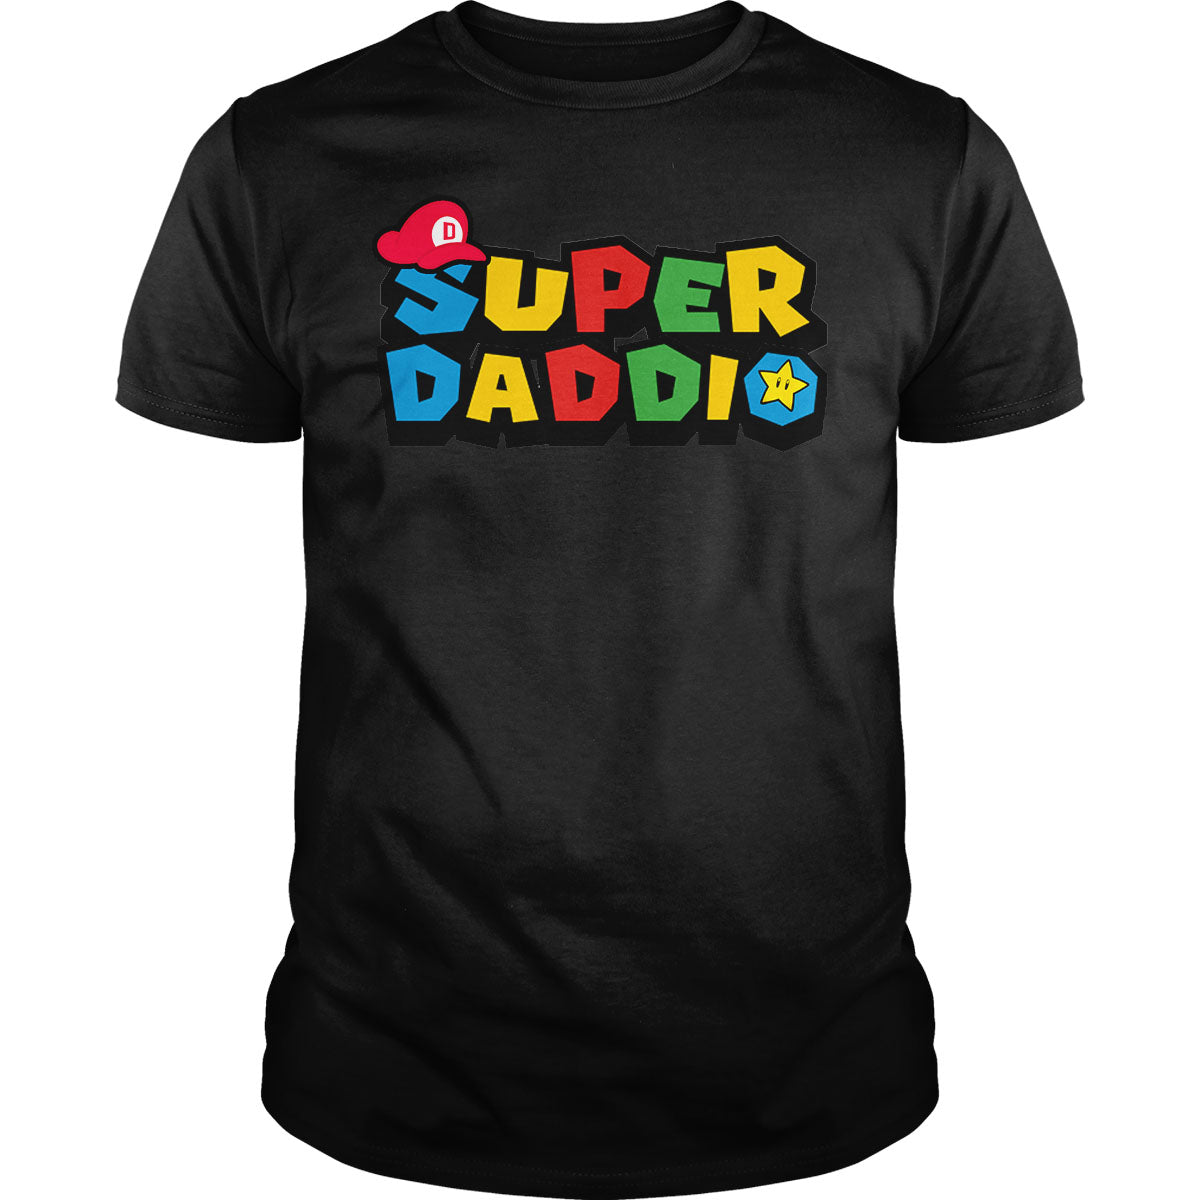 Super Daddio - BustedTees.com